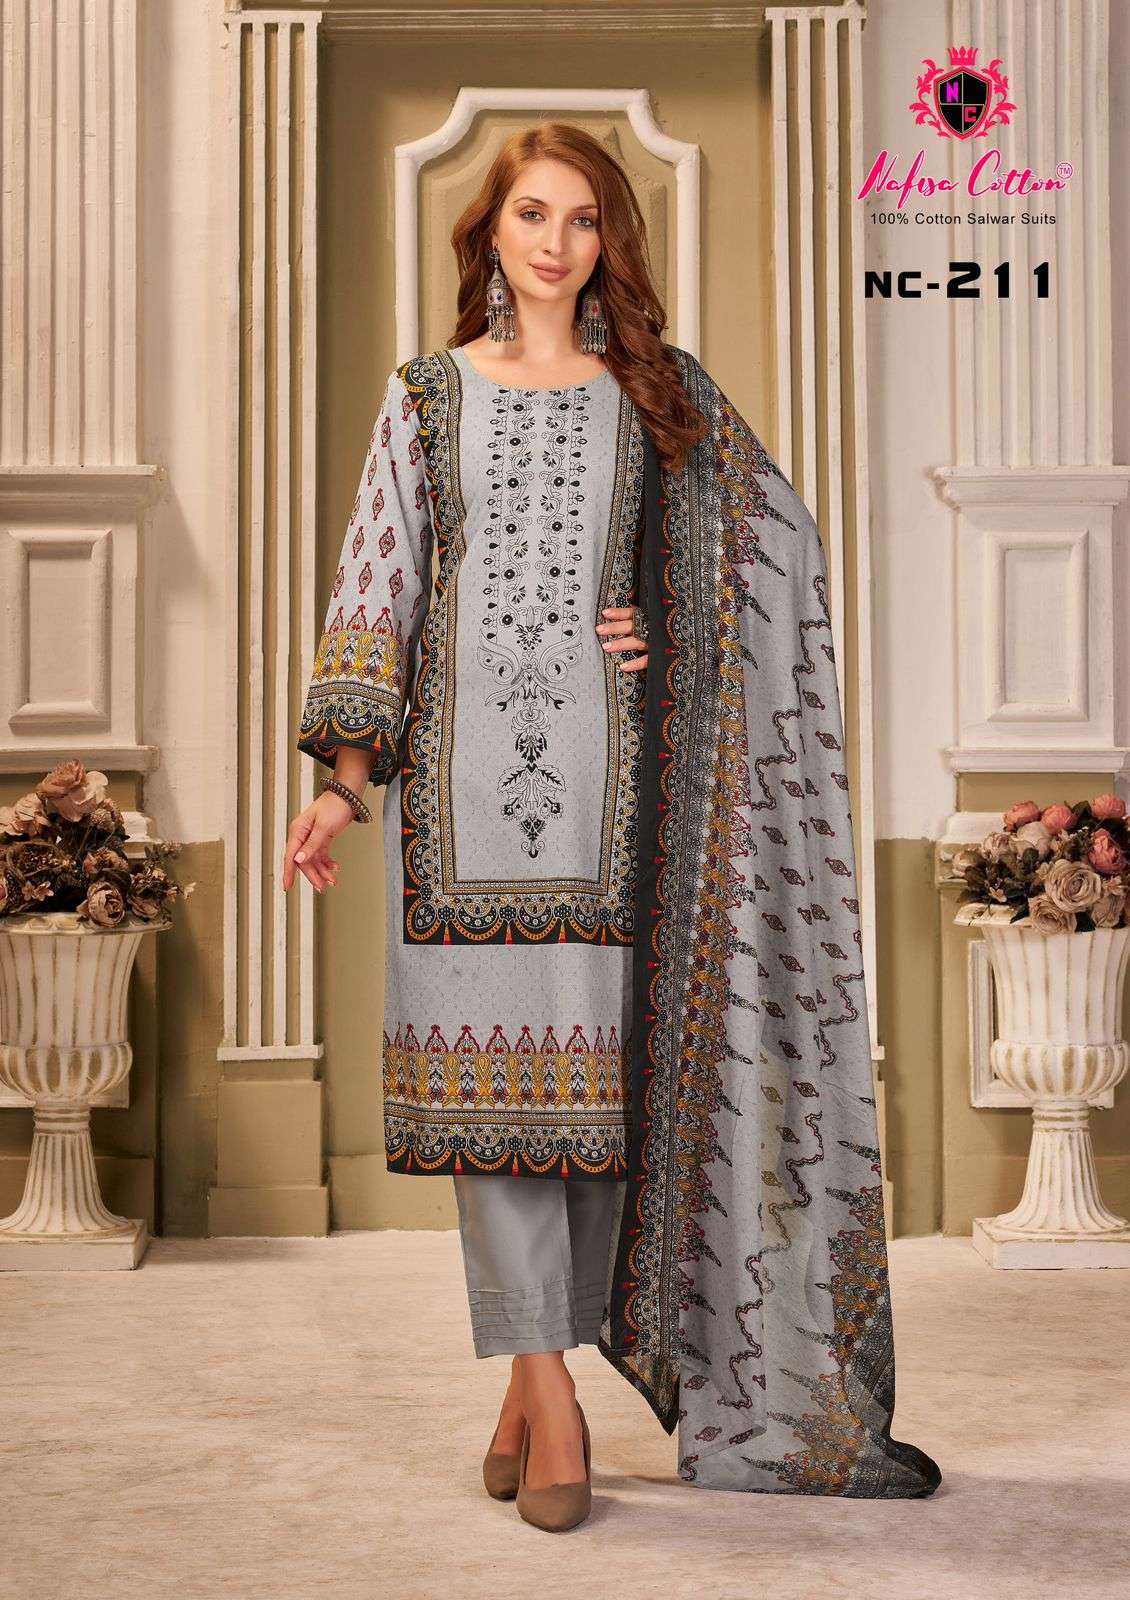 nafisha cotton andaaz karachi suits vol-2 207-212 series latest pakistani salwar kameez wholesaler surat gujarat